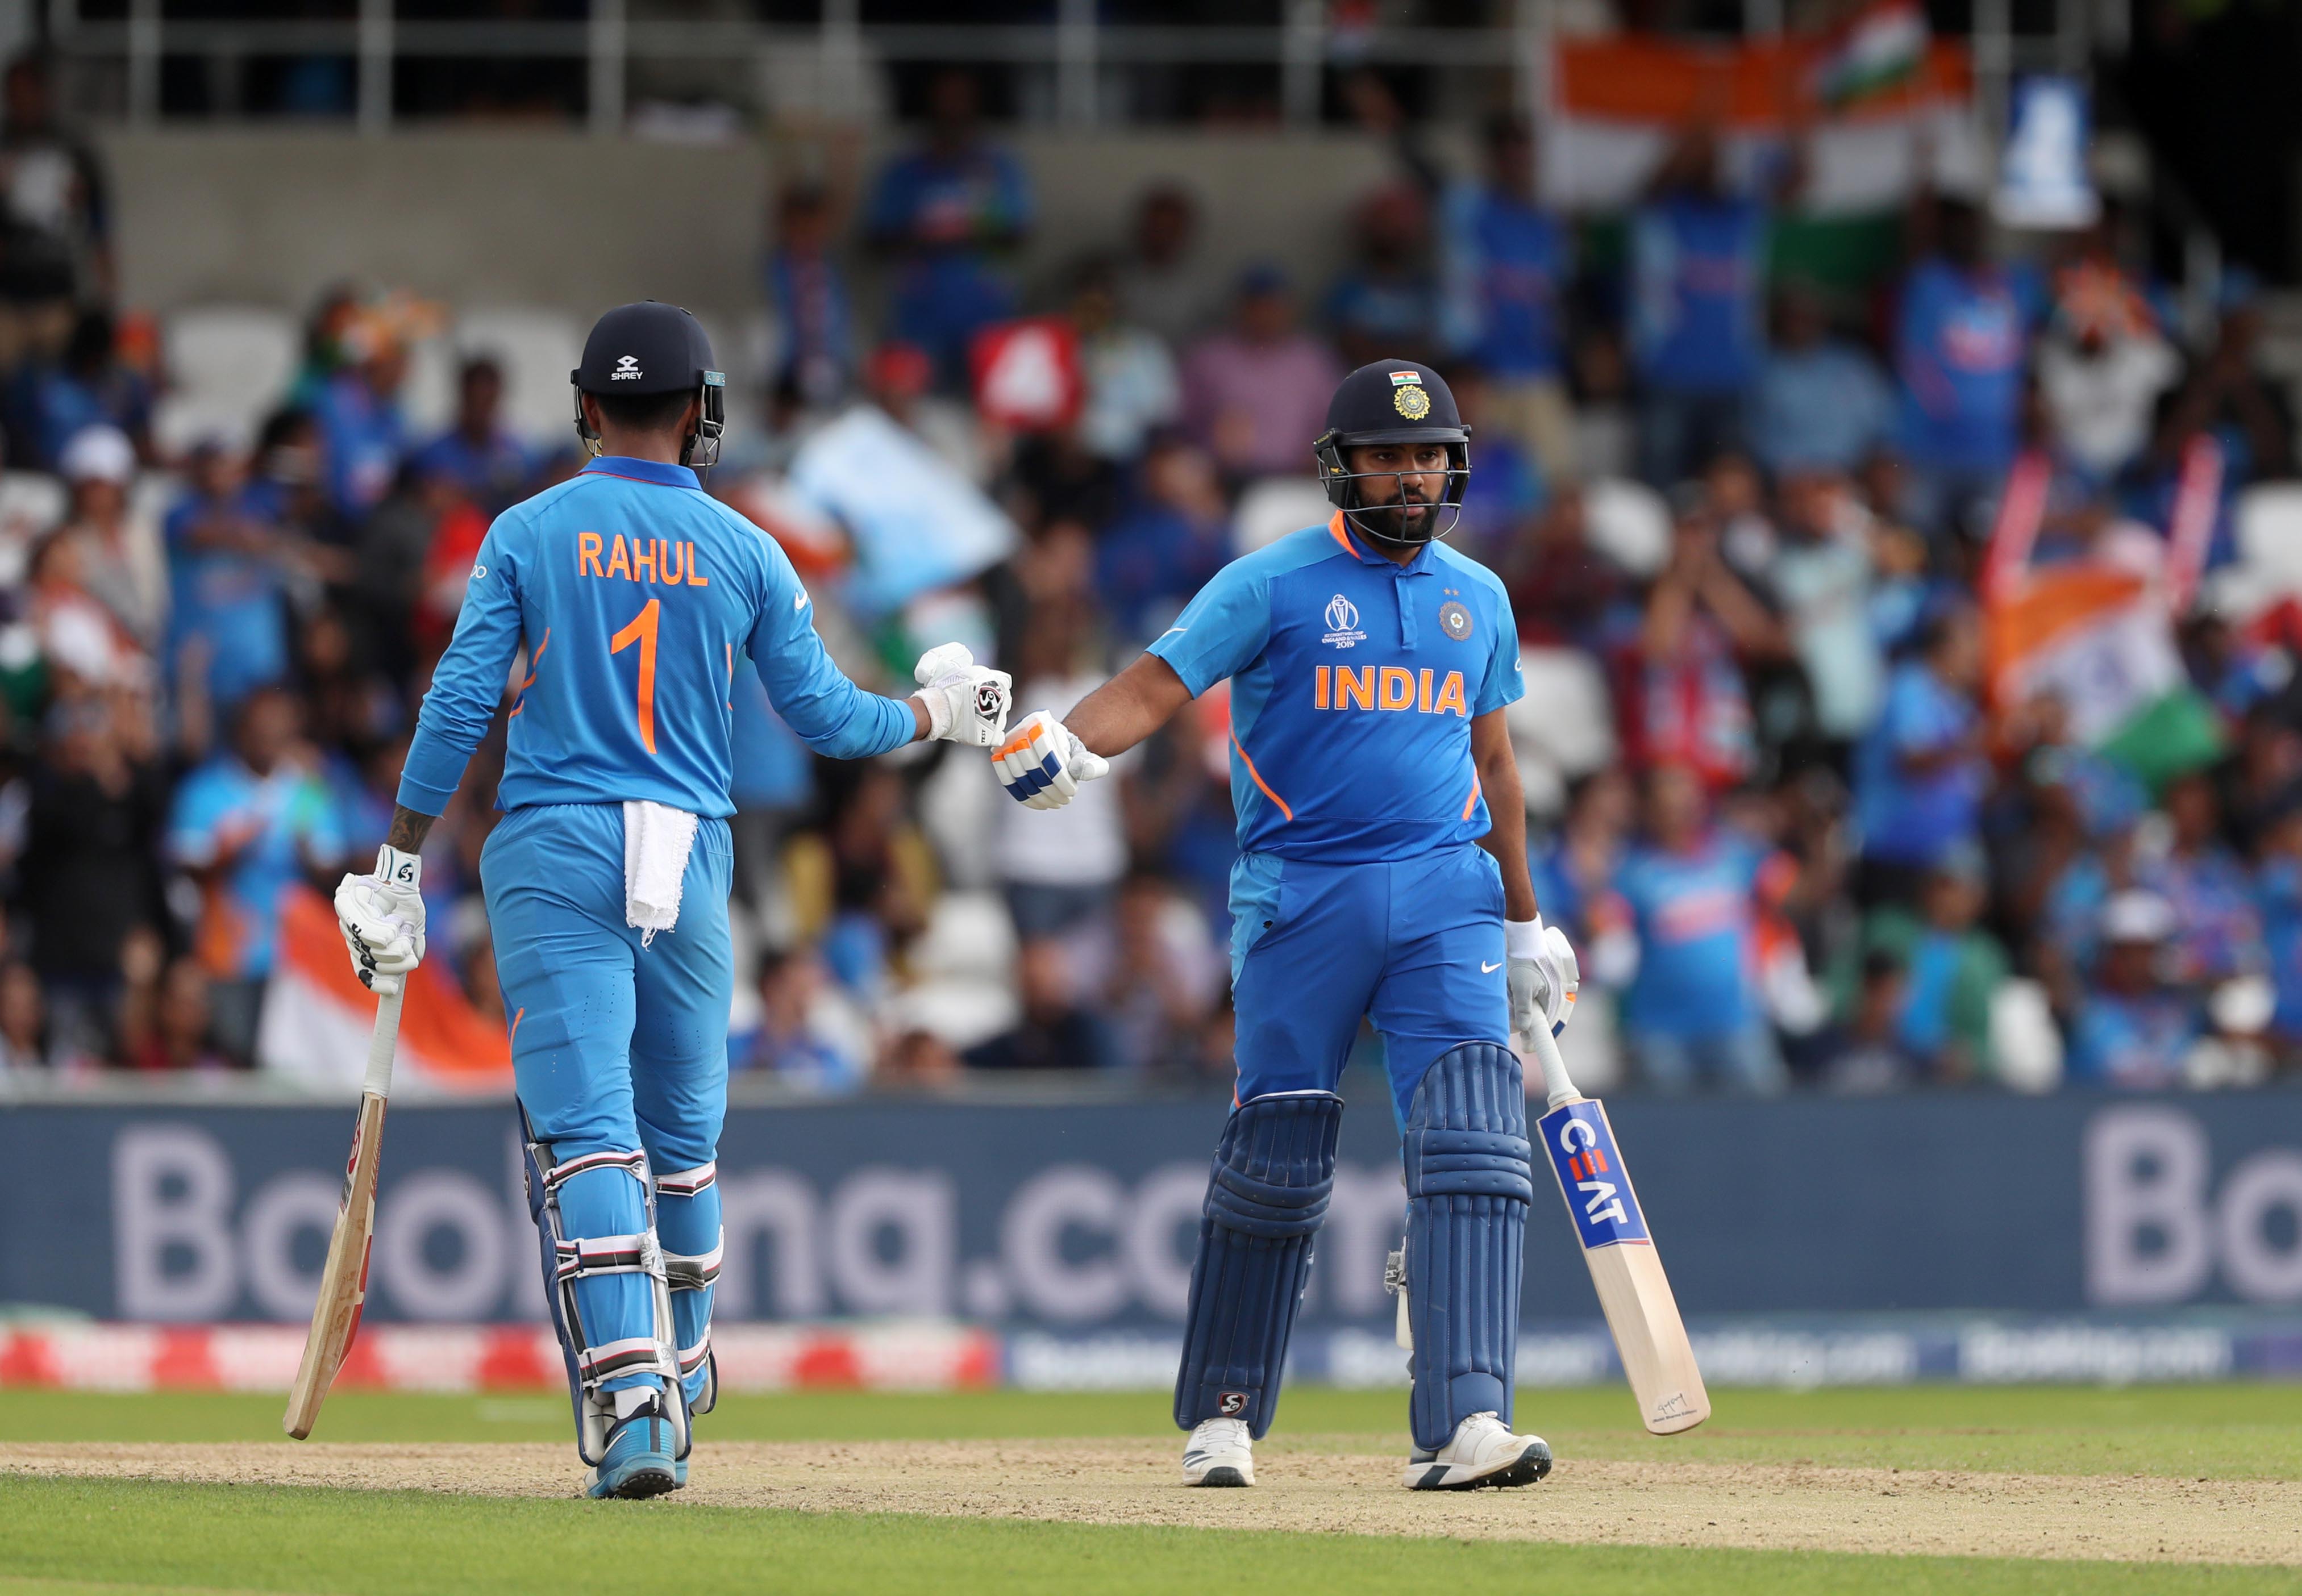 India vs Sri Lanka Live Cricket Score, World Cup 2019 In Pictures - IND vs SL Live ...